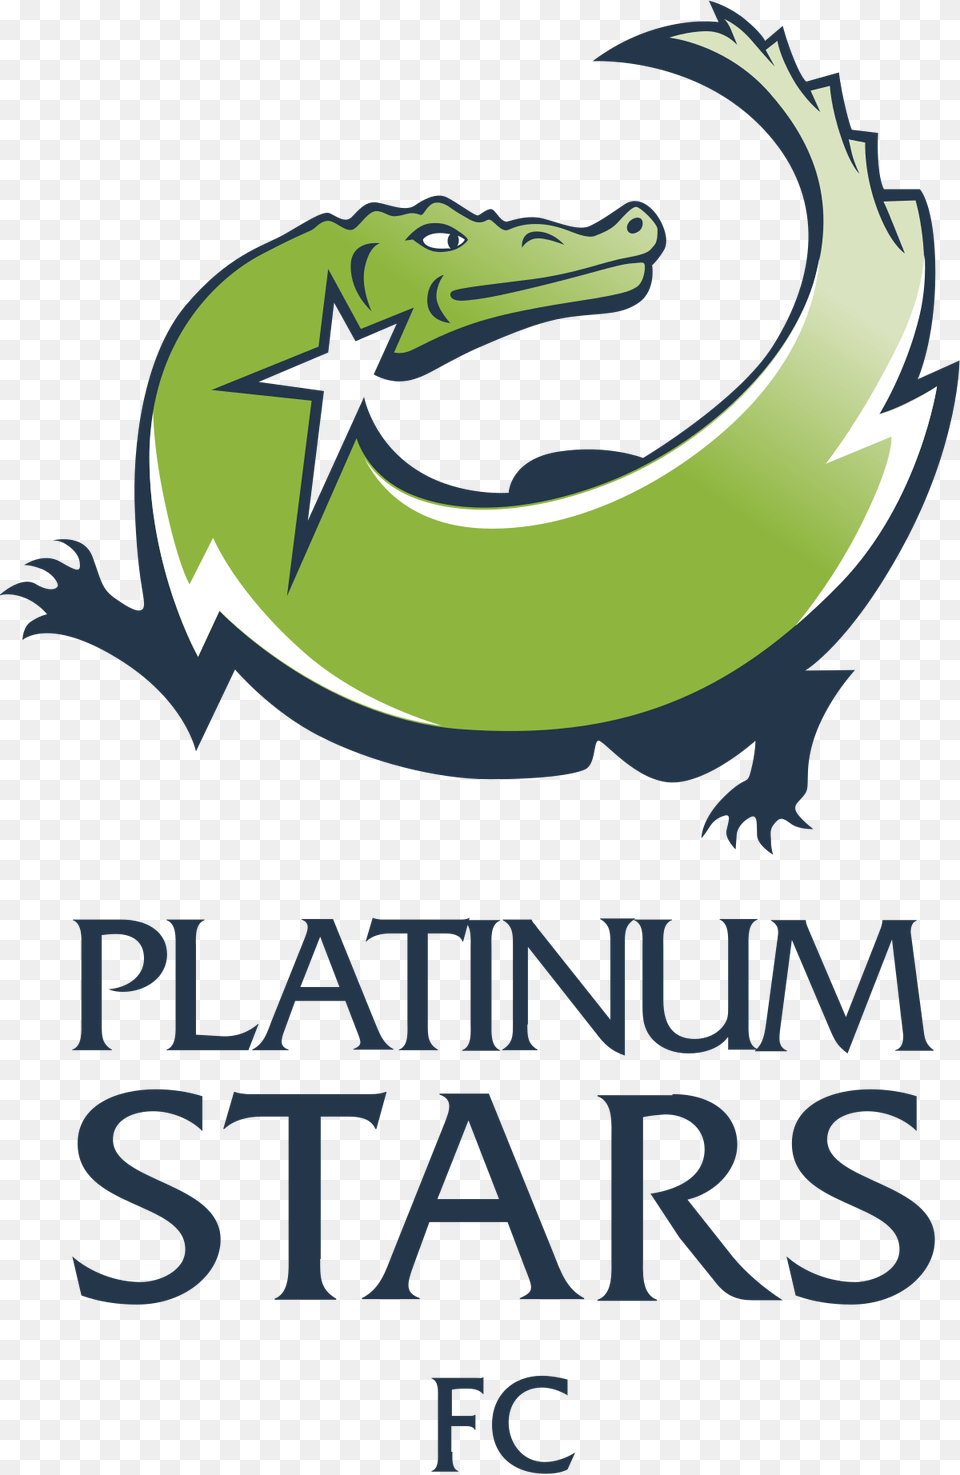 Platinum Stars Fc South Africa Logo, Animal, Reptile, Crocodile Png